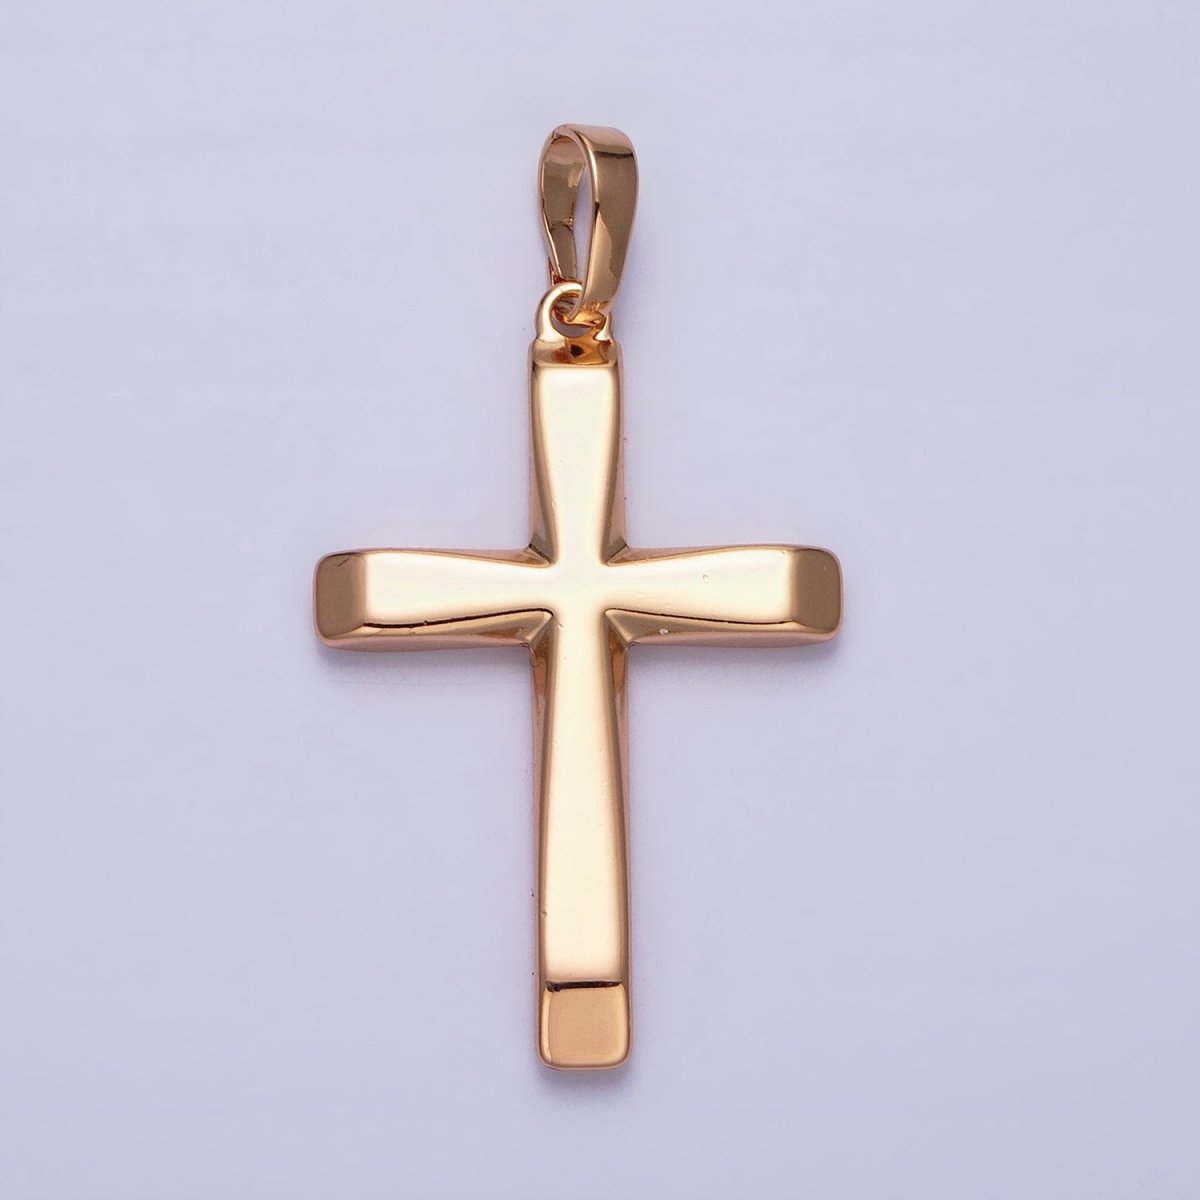 18K Gold Filled Cross Pendant Minimalist Cross Charm Religious Jewelry Making AA244 - DLUXCA